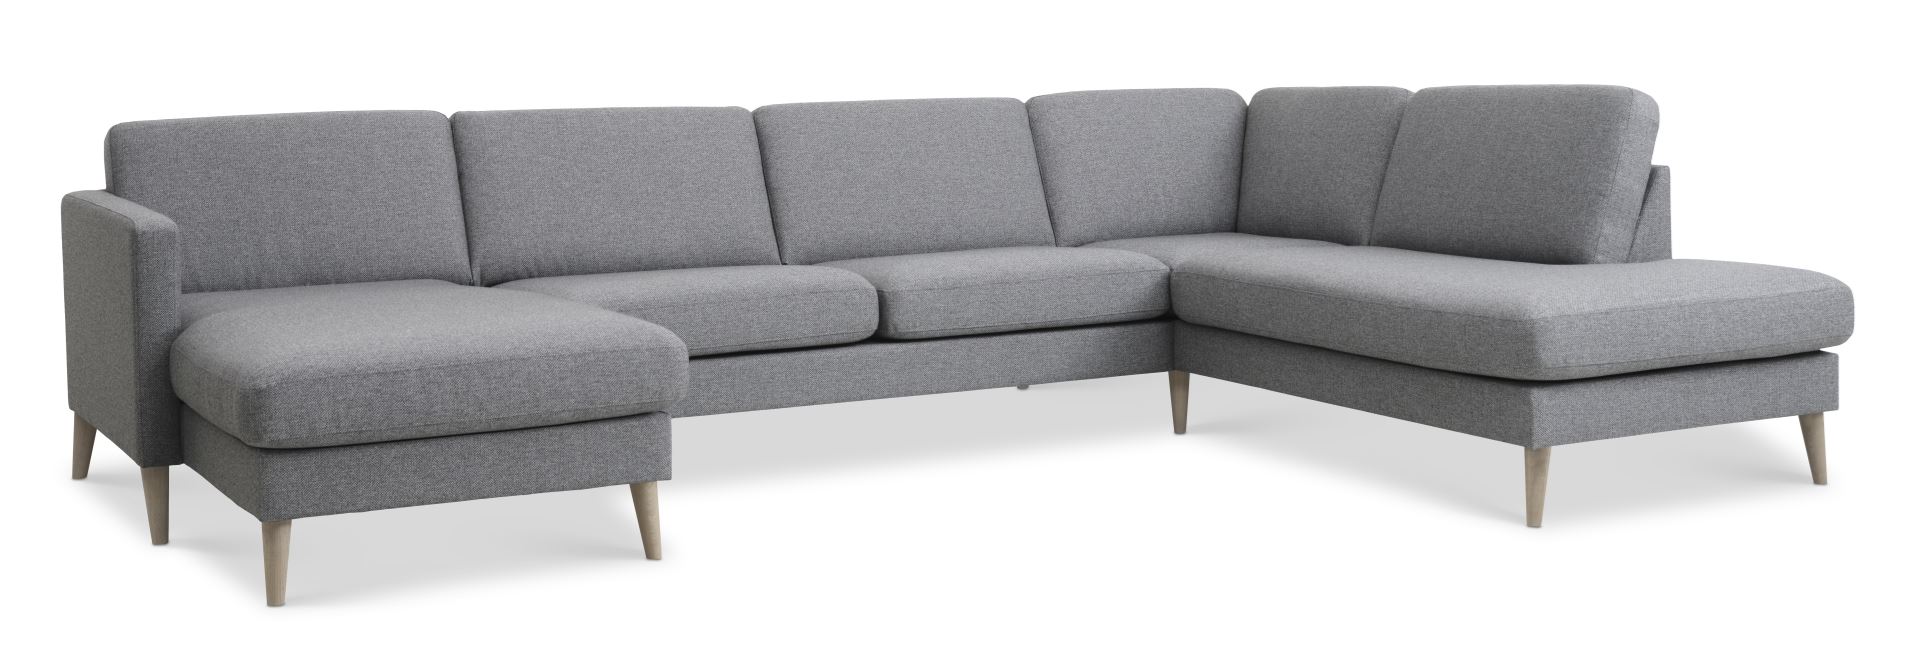 Ask sæt 55 U OE sofa, m. højre chaiselong - lys granitgrå polyester stof og natur træ